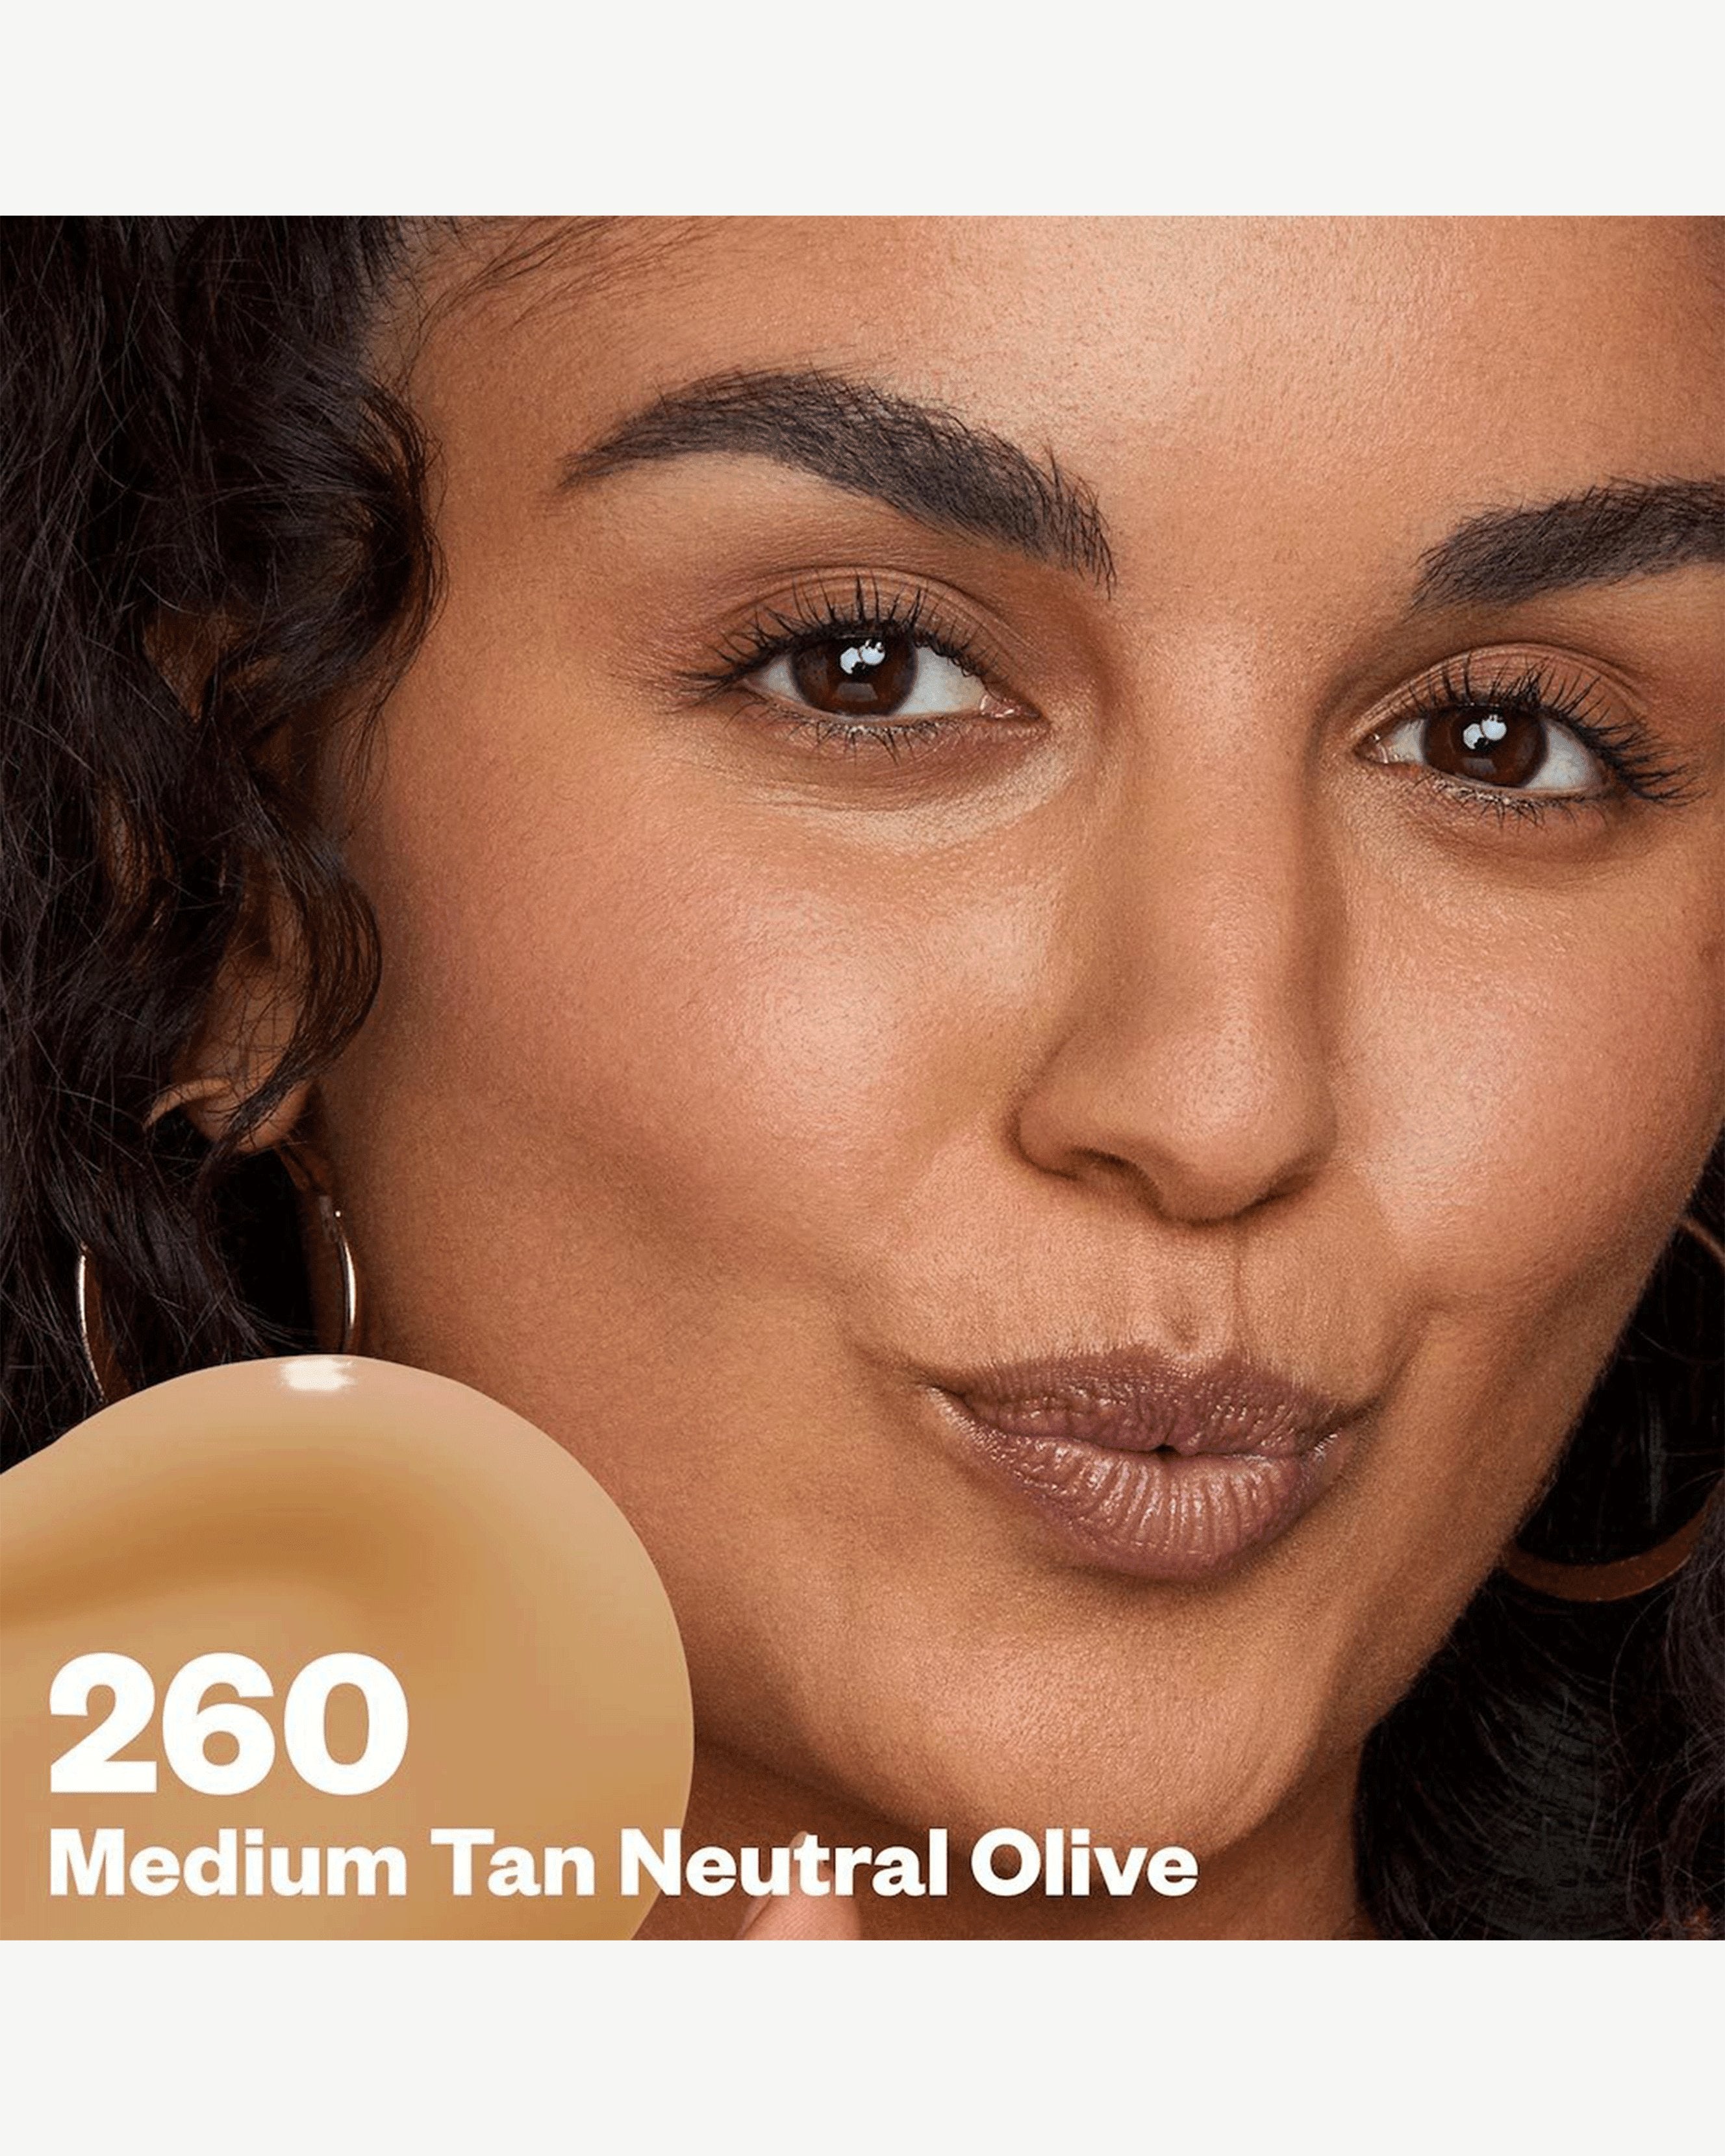 Medium Tan Neutral Olive 260 (medium tan with neutral olive undertones)